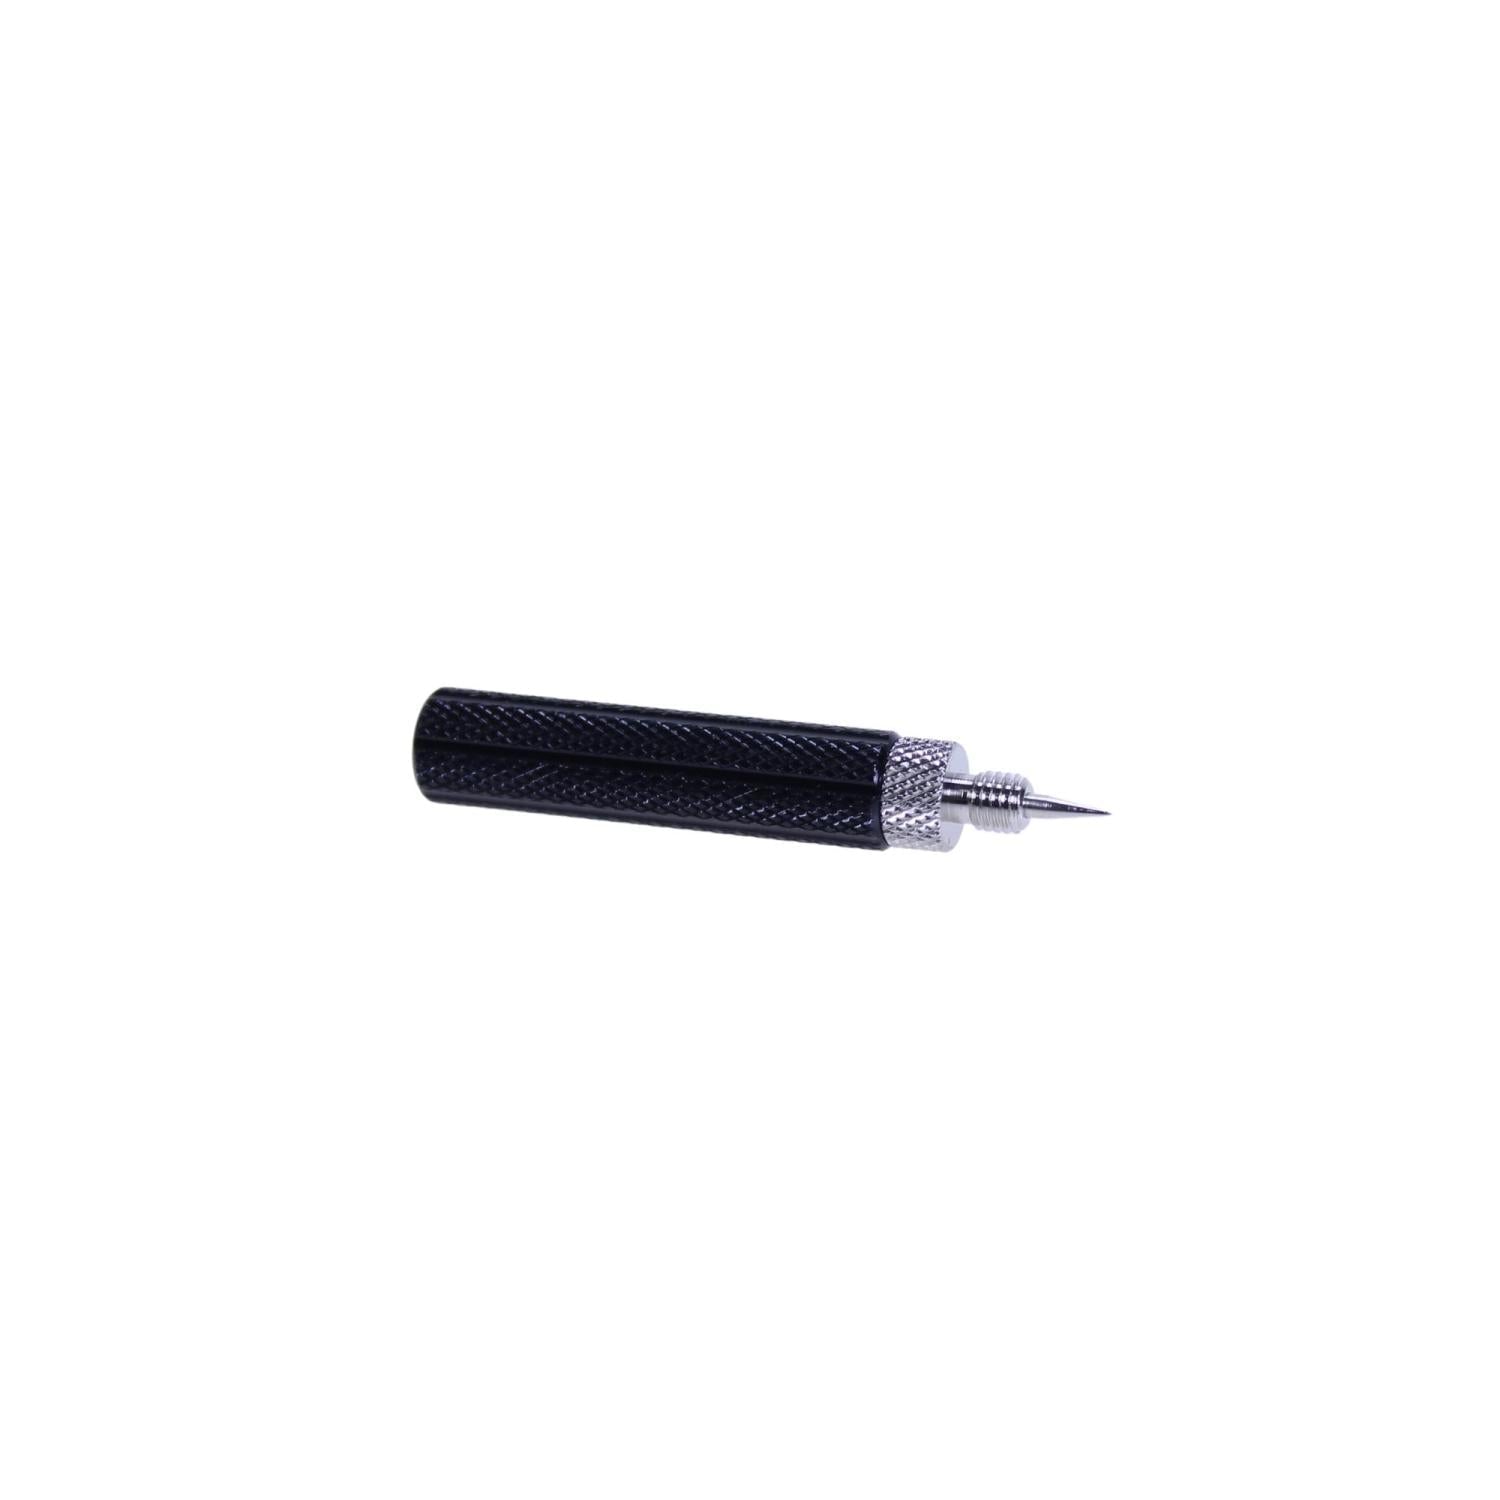 11in1 Slimme ontwikkelde Pen - RVS - Bivakshop